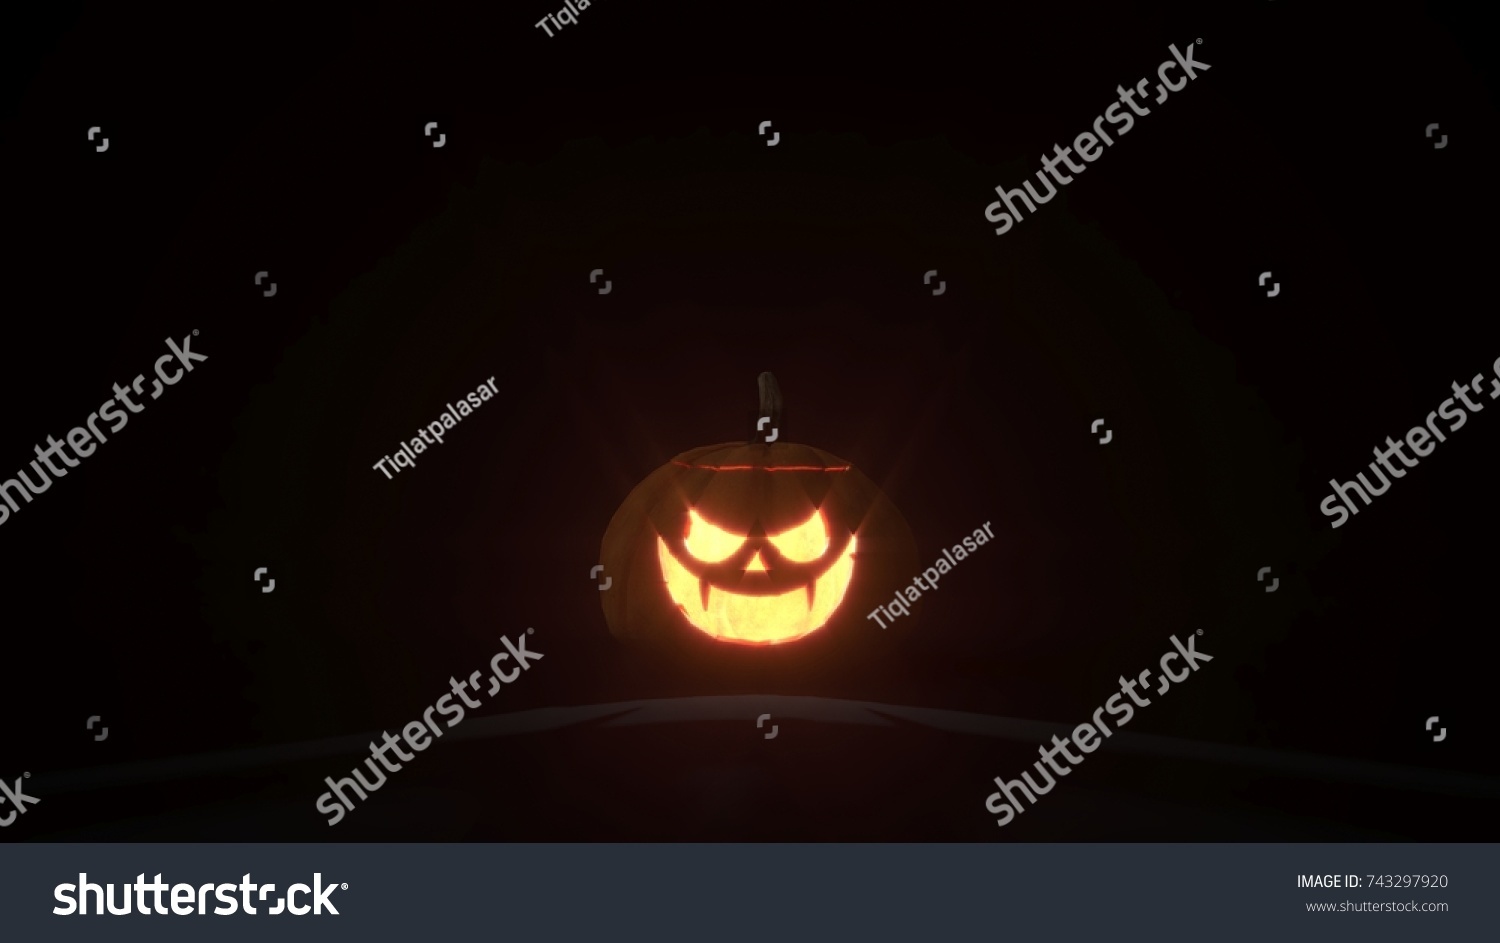 3d rendering of smiling scary jack o lantern Halloween pumpkin on dark background. 3d illustration. #743297920